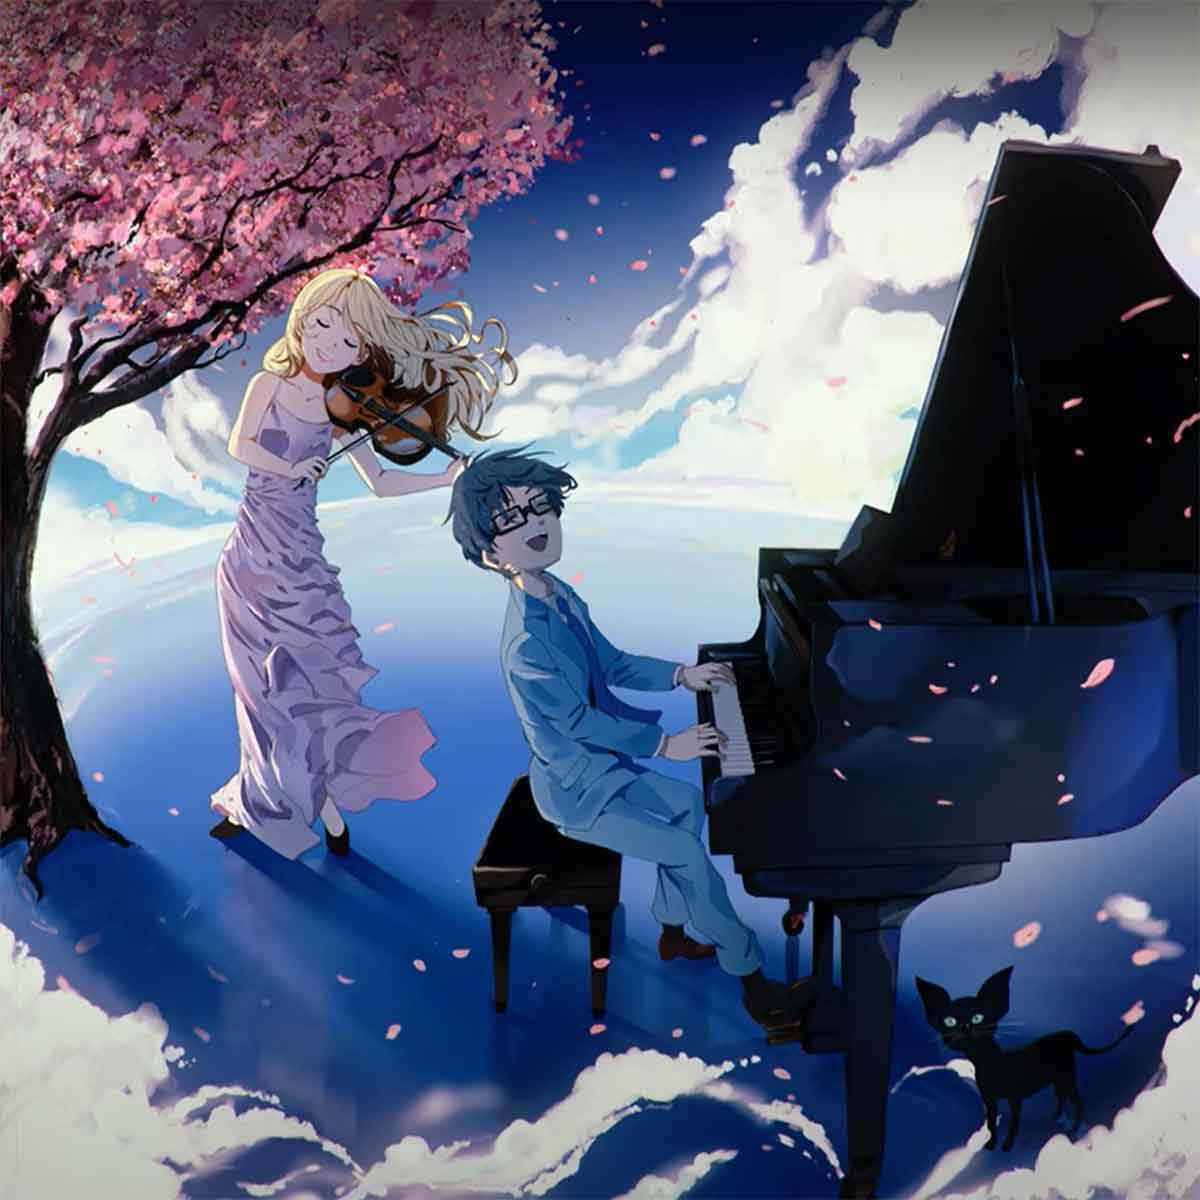 Play Losing Heart (Kimiuso) | Music on Virtual Piano